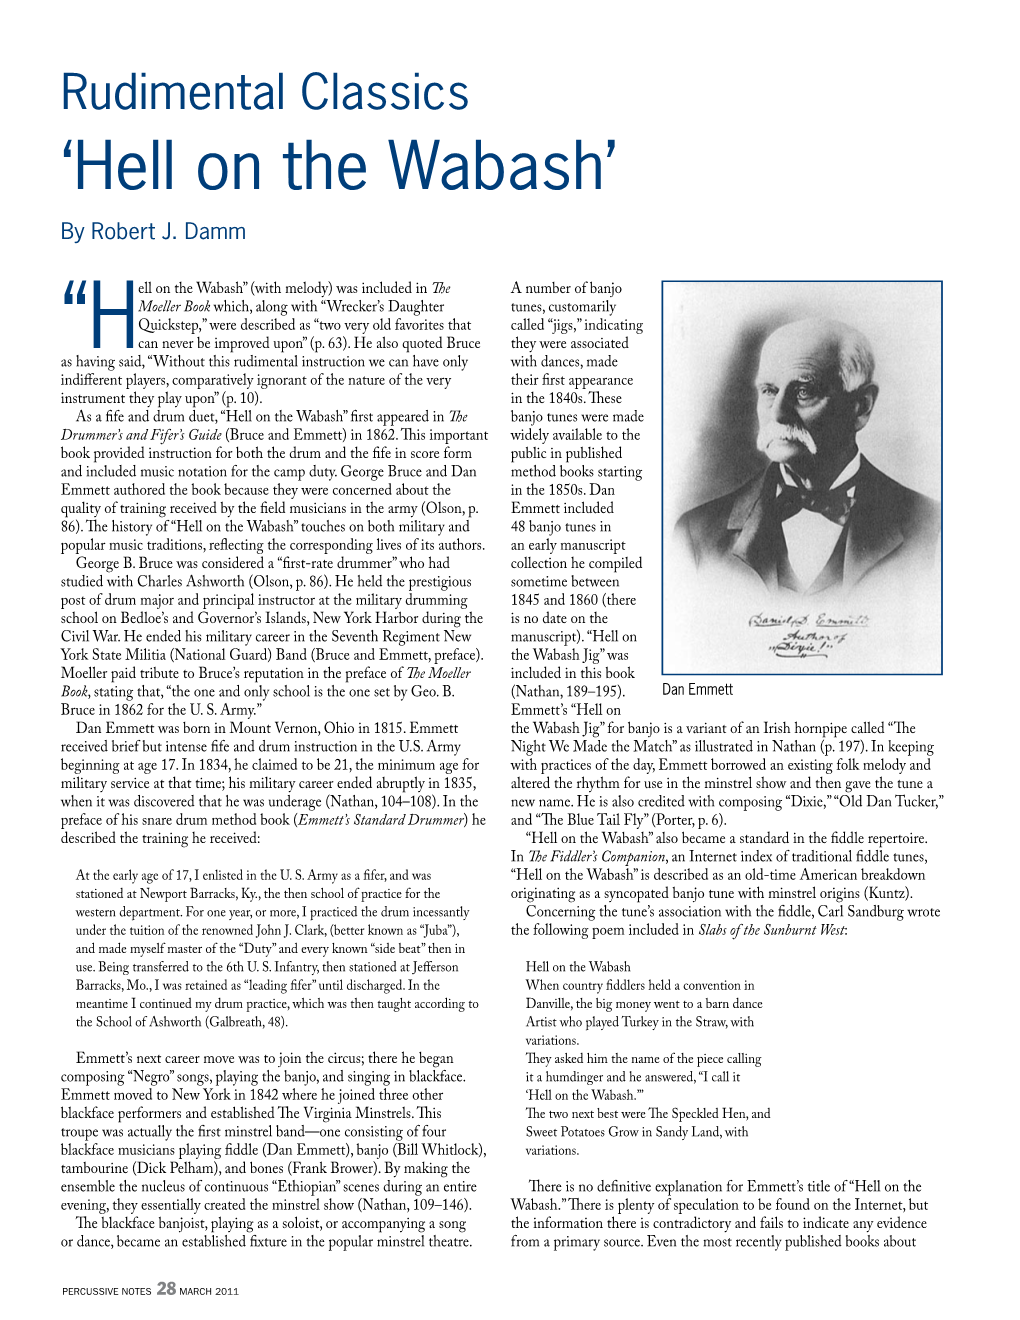 Rudimental Classics: 'Hell on the Wabash'